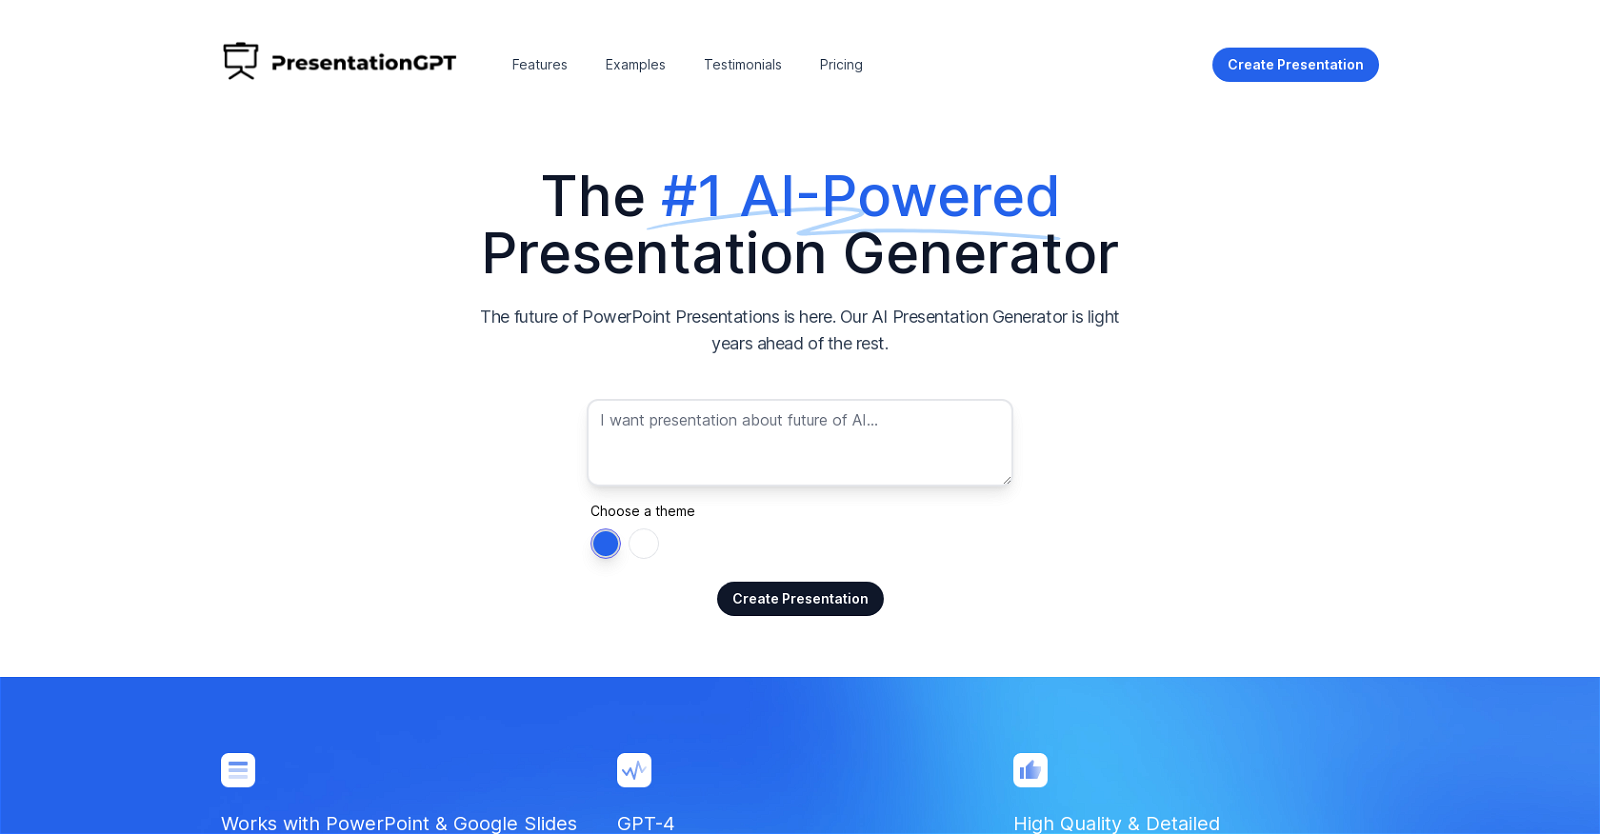 PresentationGPT website